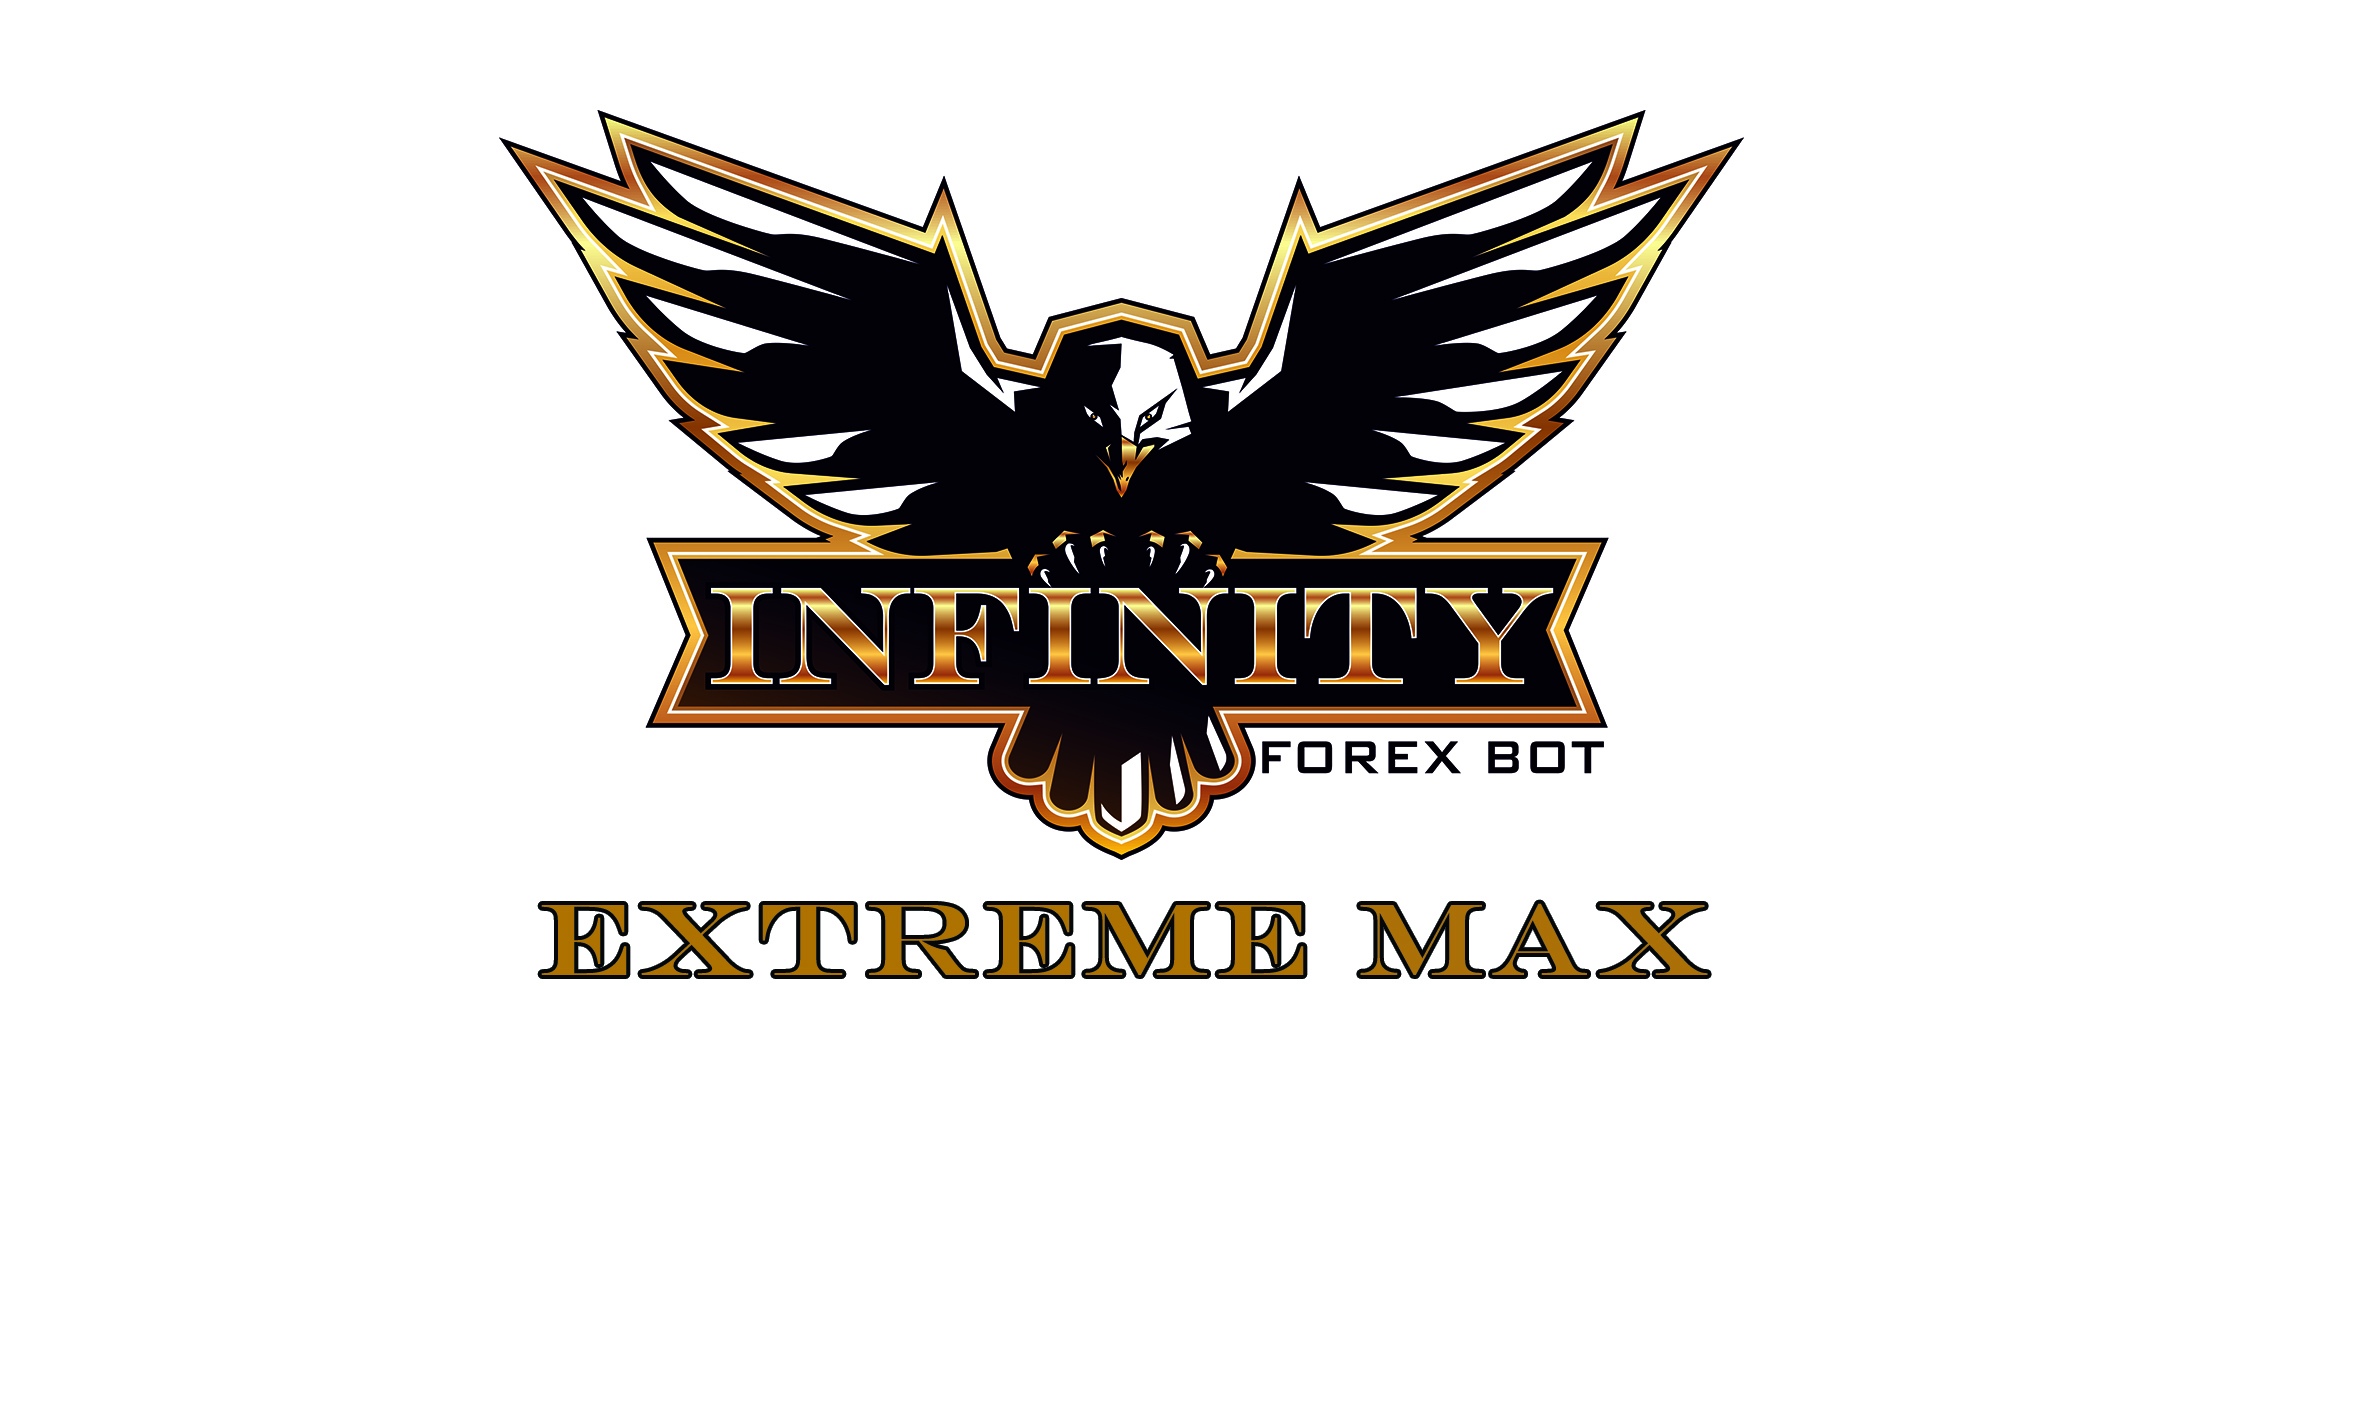 Infinity Extreme max